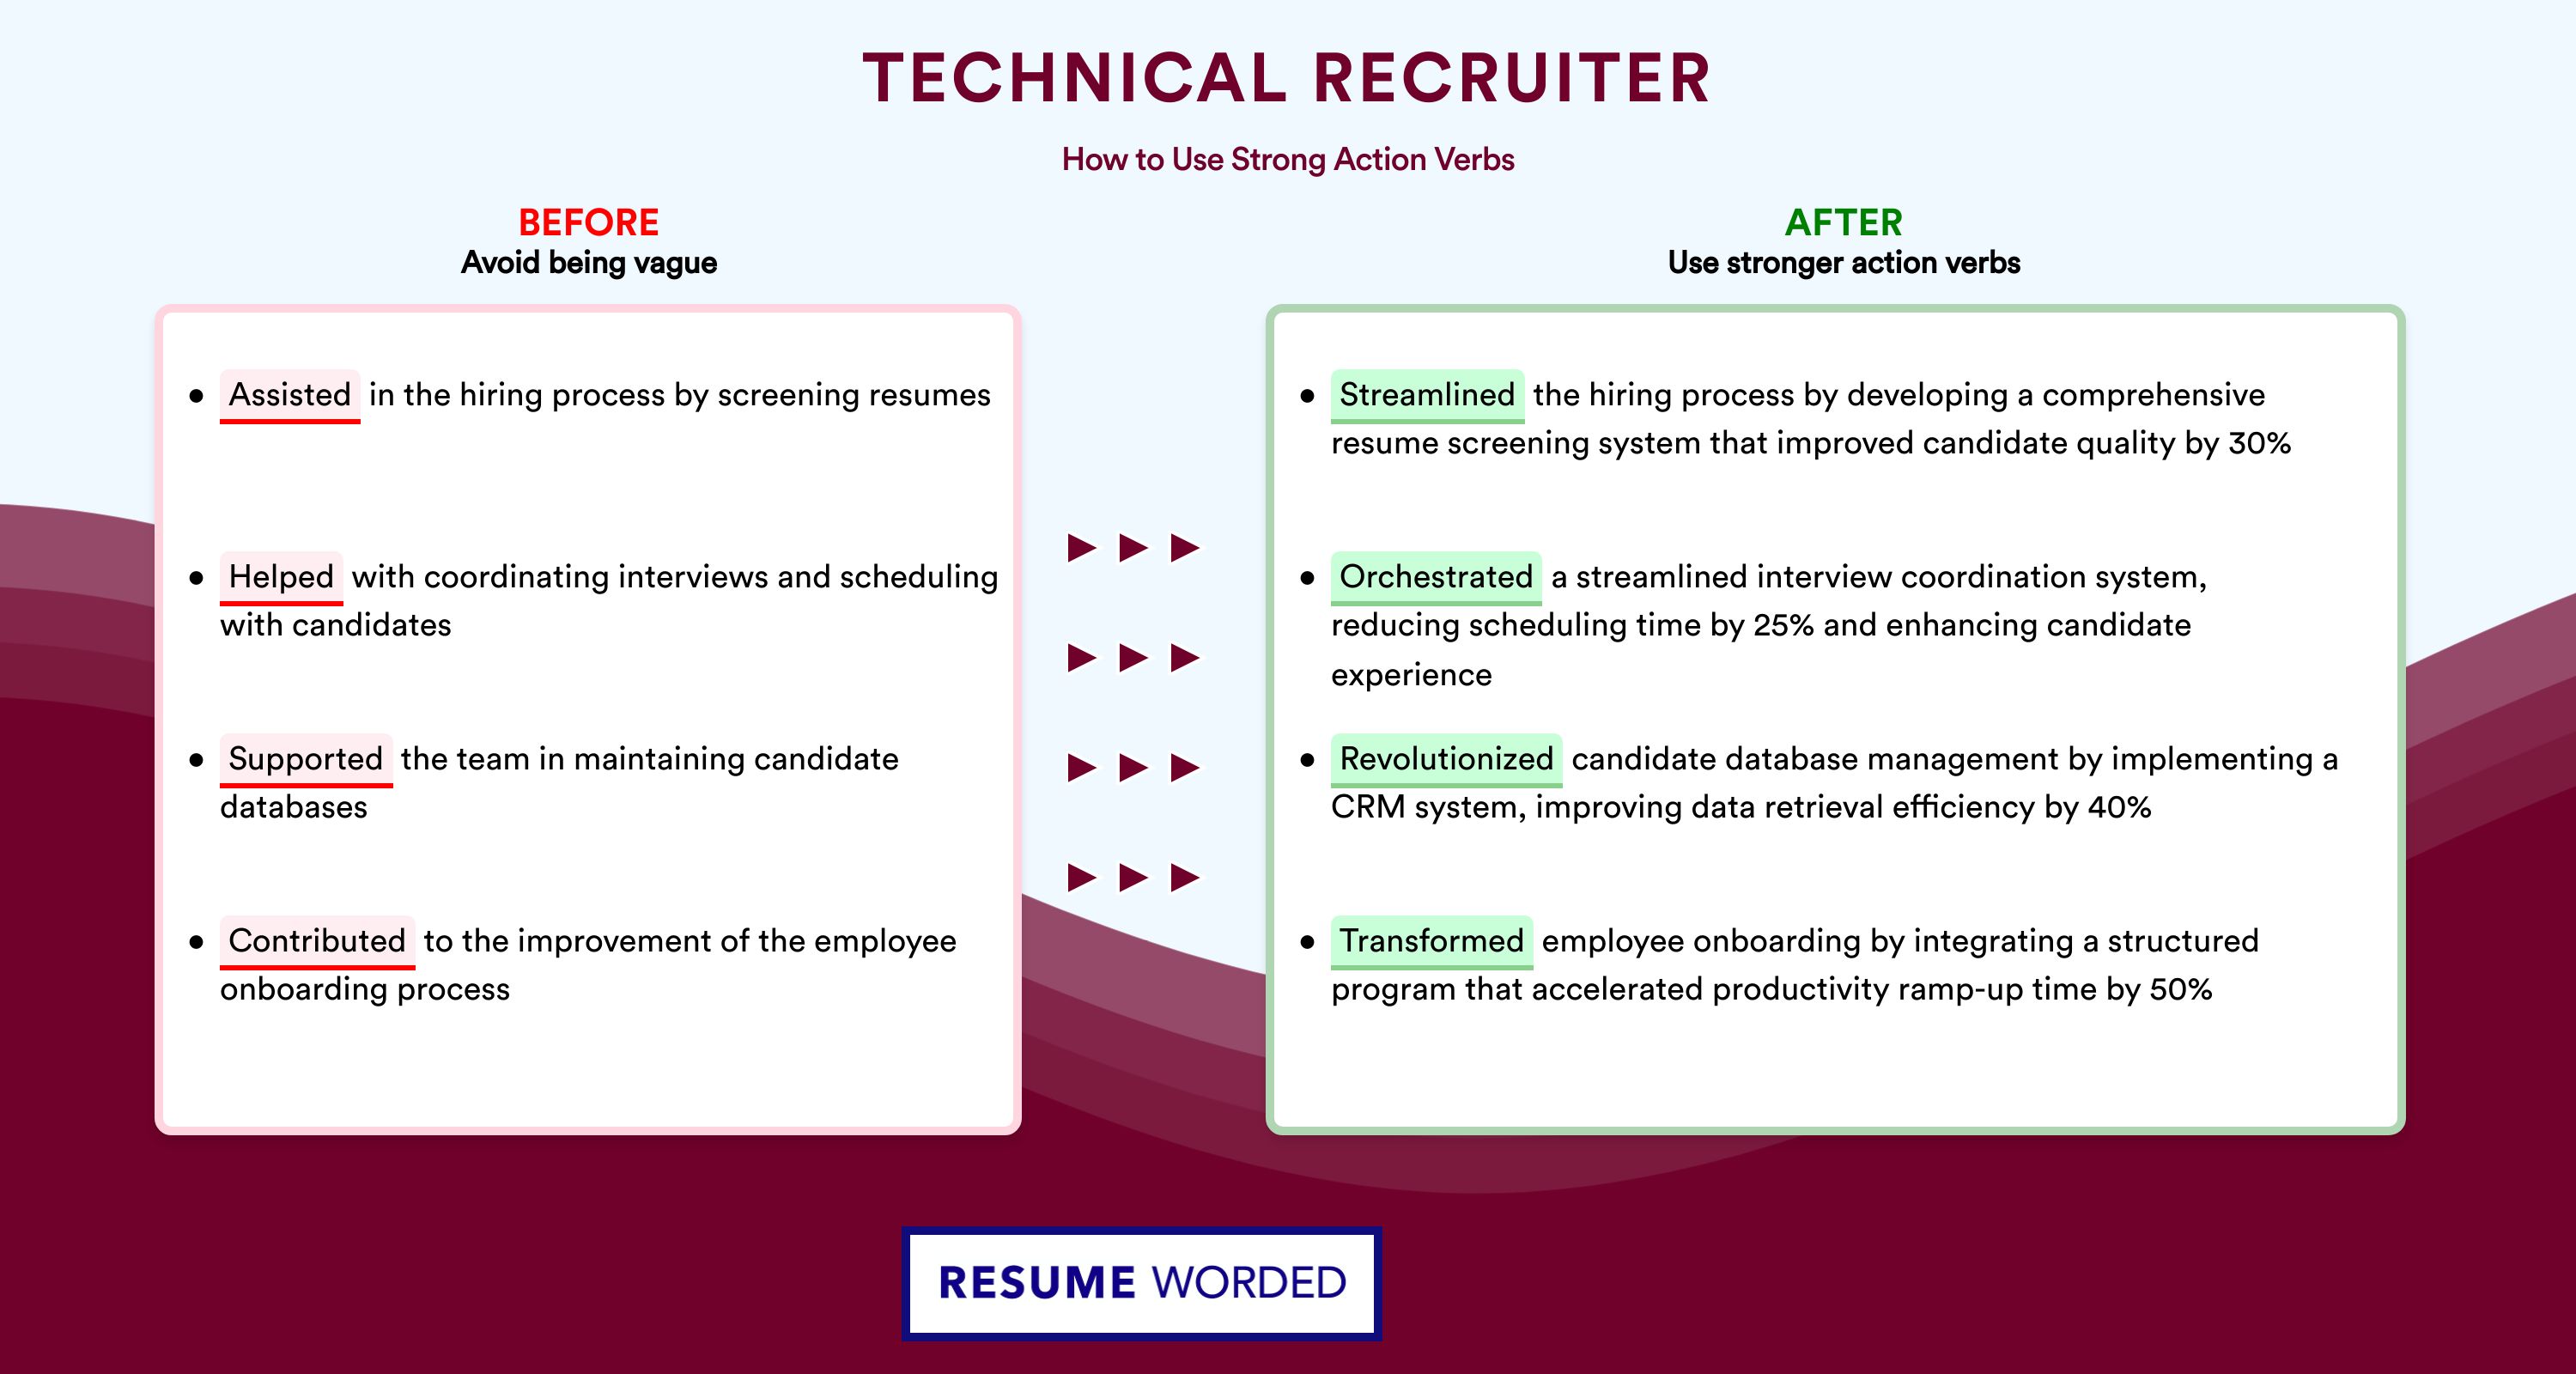 Action Verbs for Technical Recruiter